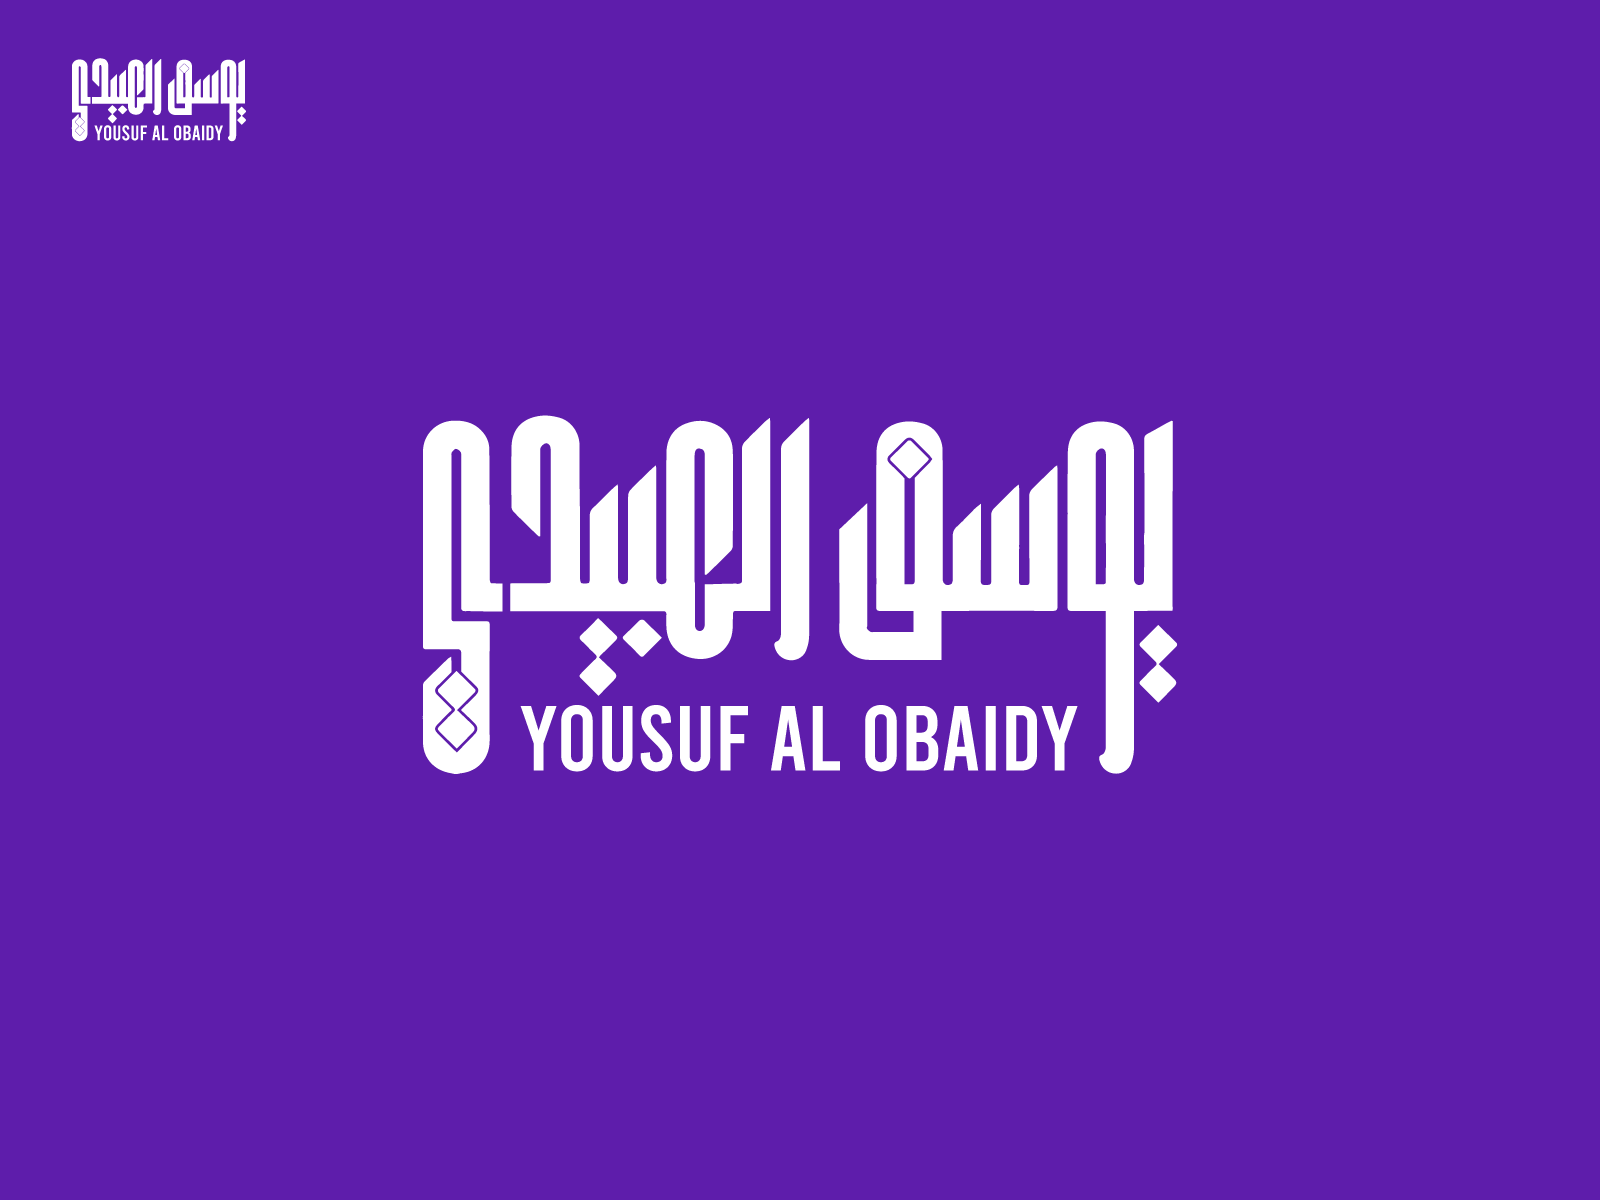 Yousuf alobaidy arabic logo arabic typography brand identity branding illustration indentity logo logo design